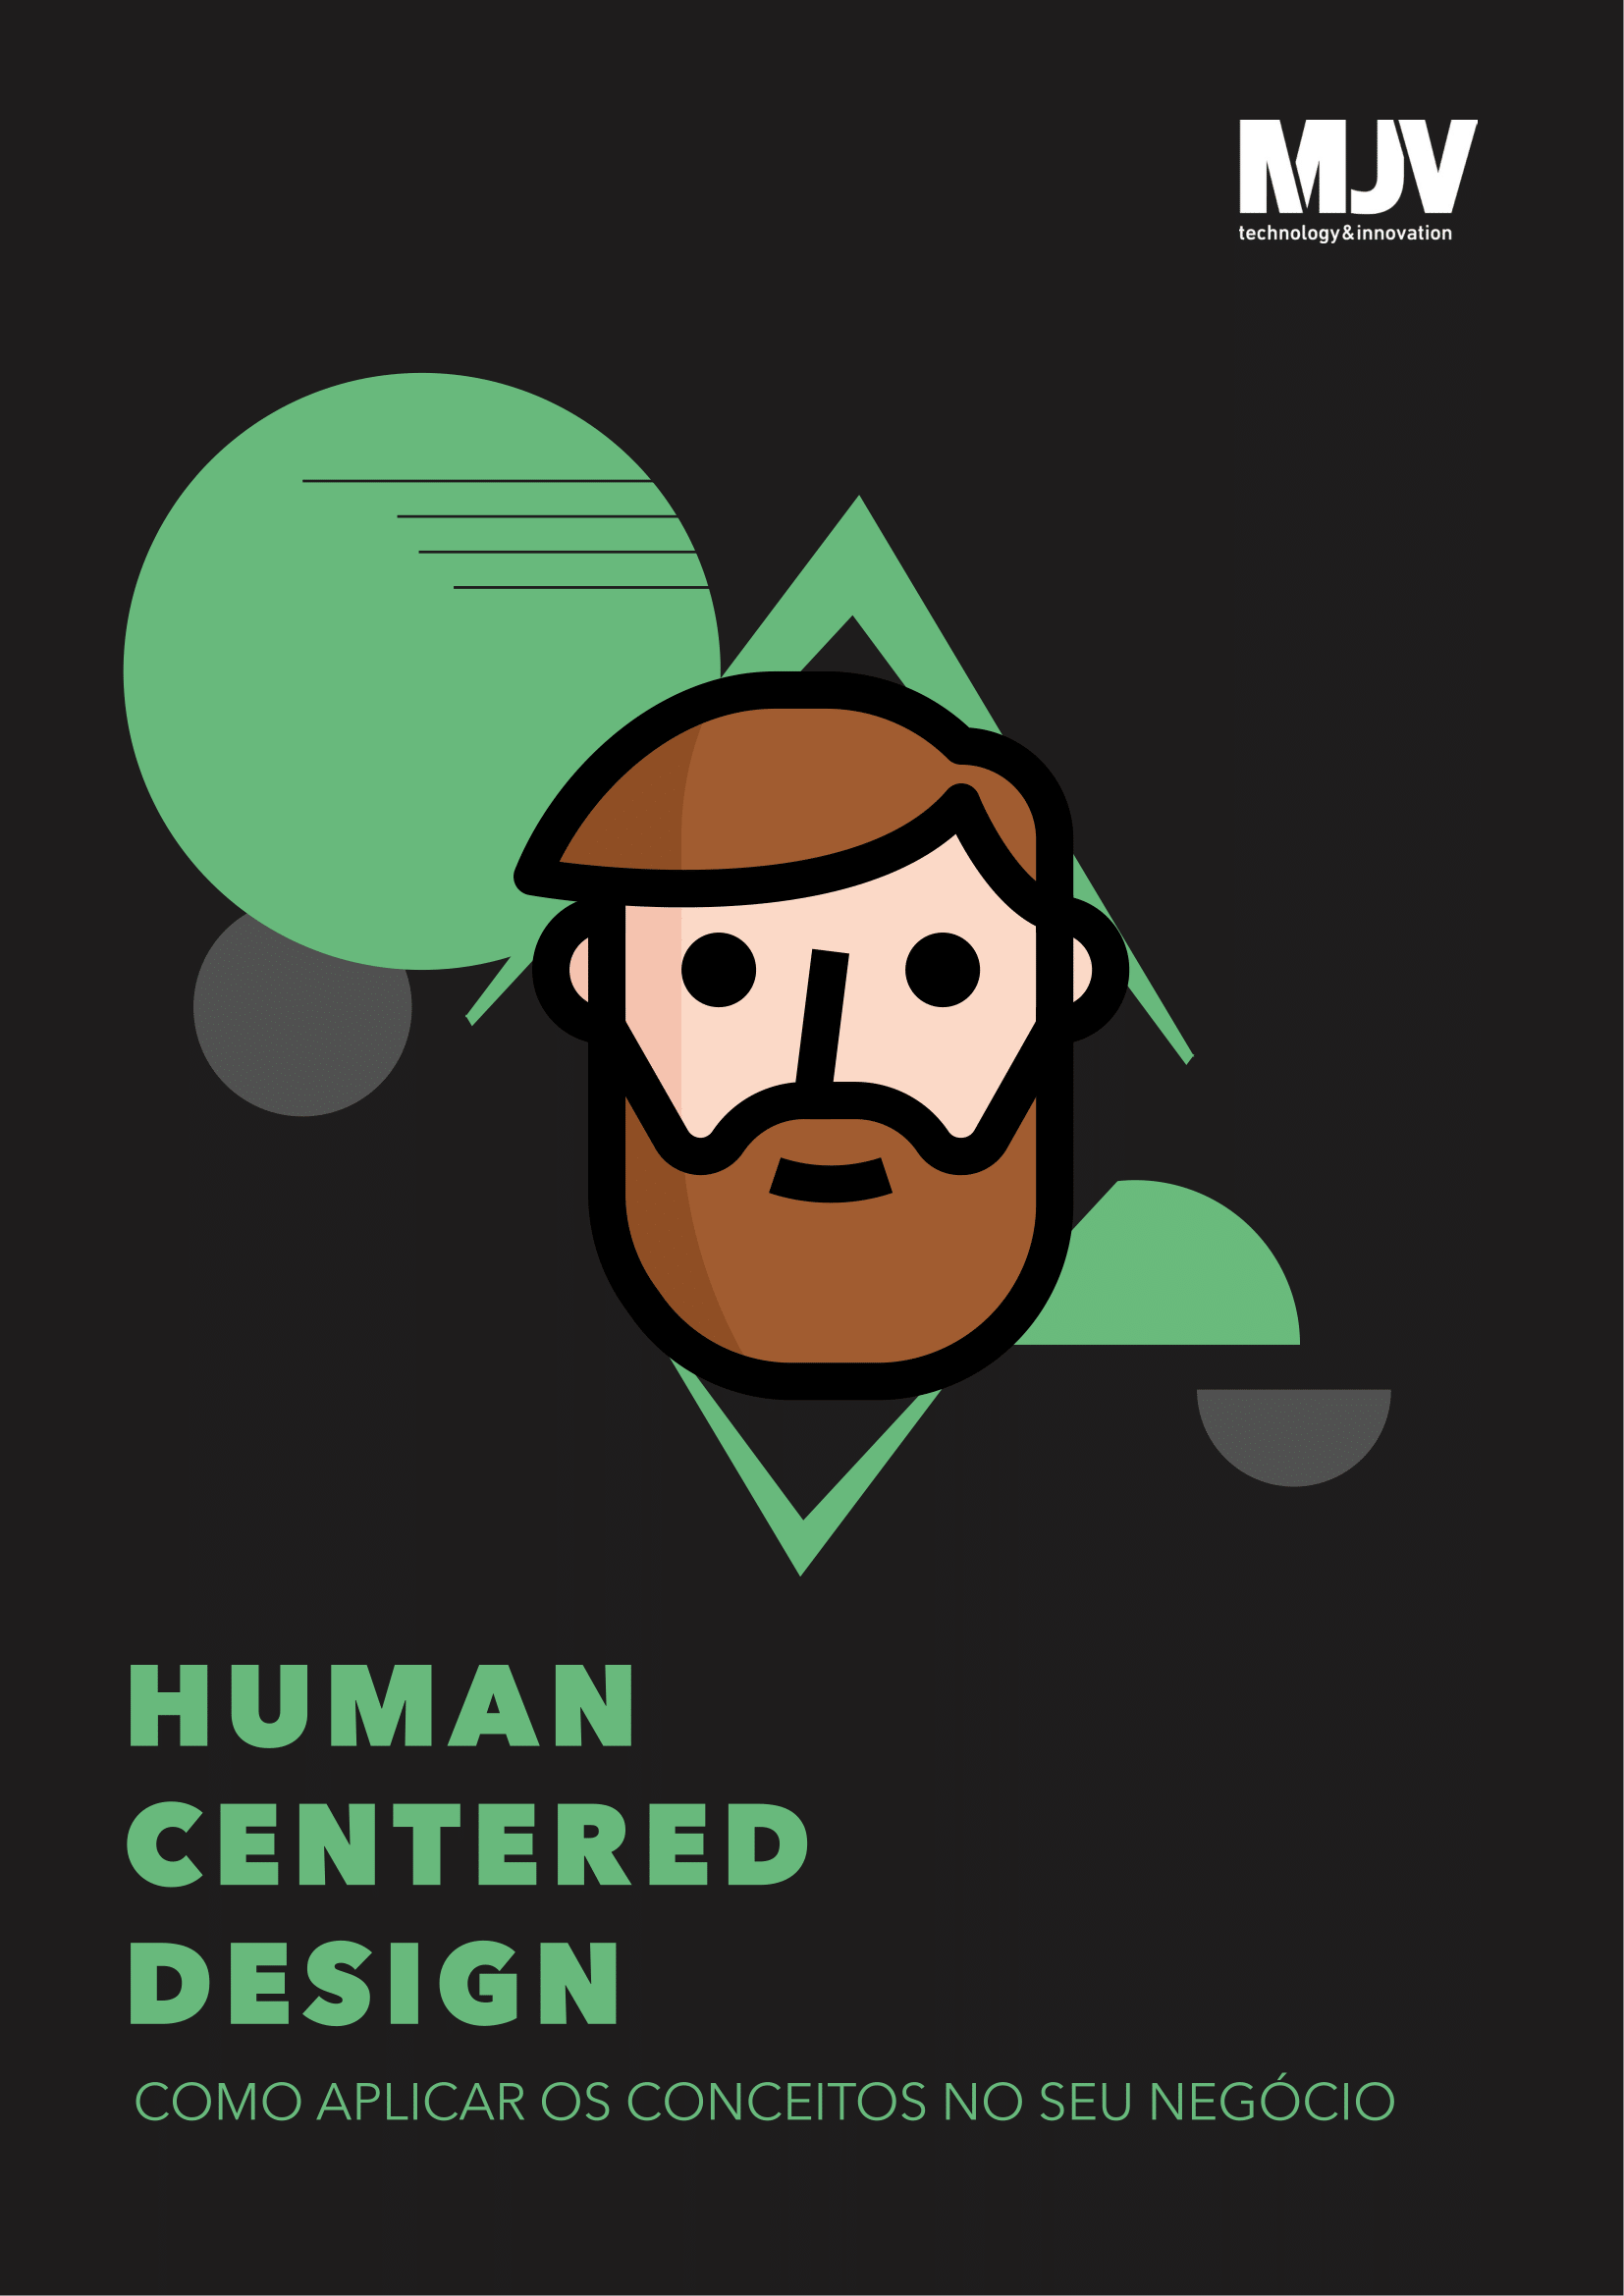 Ebook_human-centered-design-01